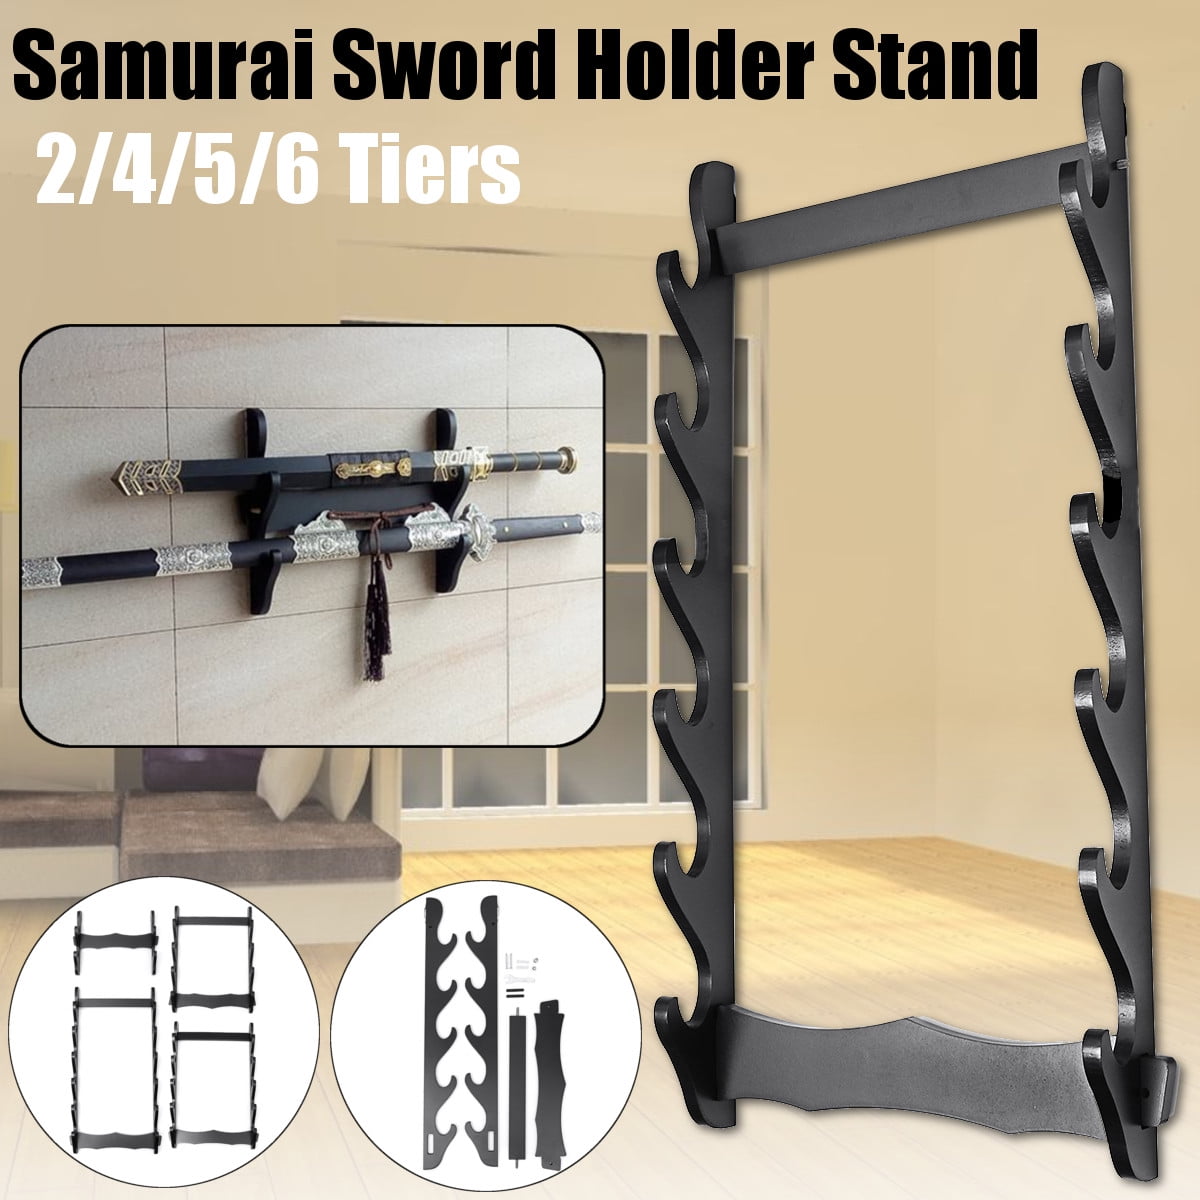 5 Tier Wall Mount Samurai Sword Katana Display Holder Stand Hanger Bracket Rack 